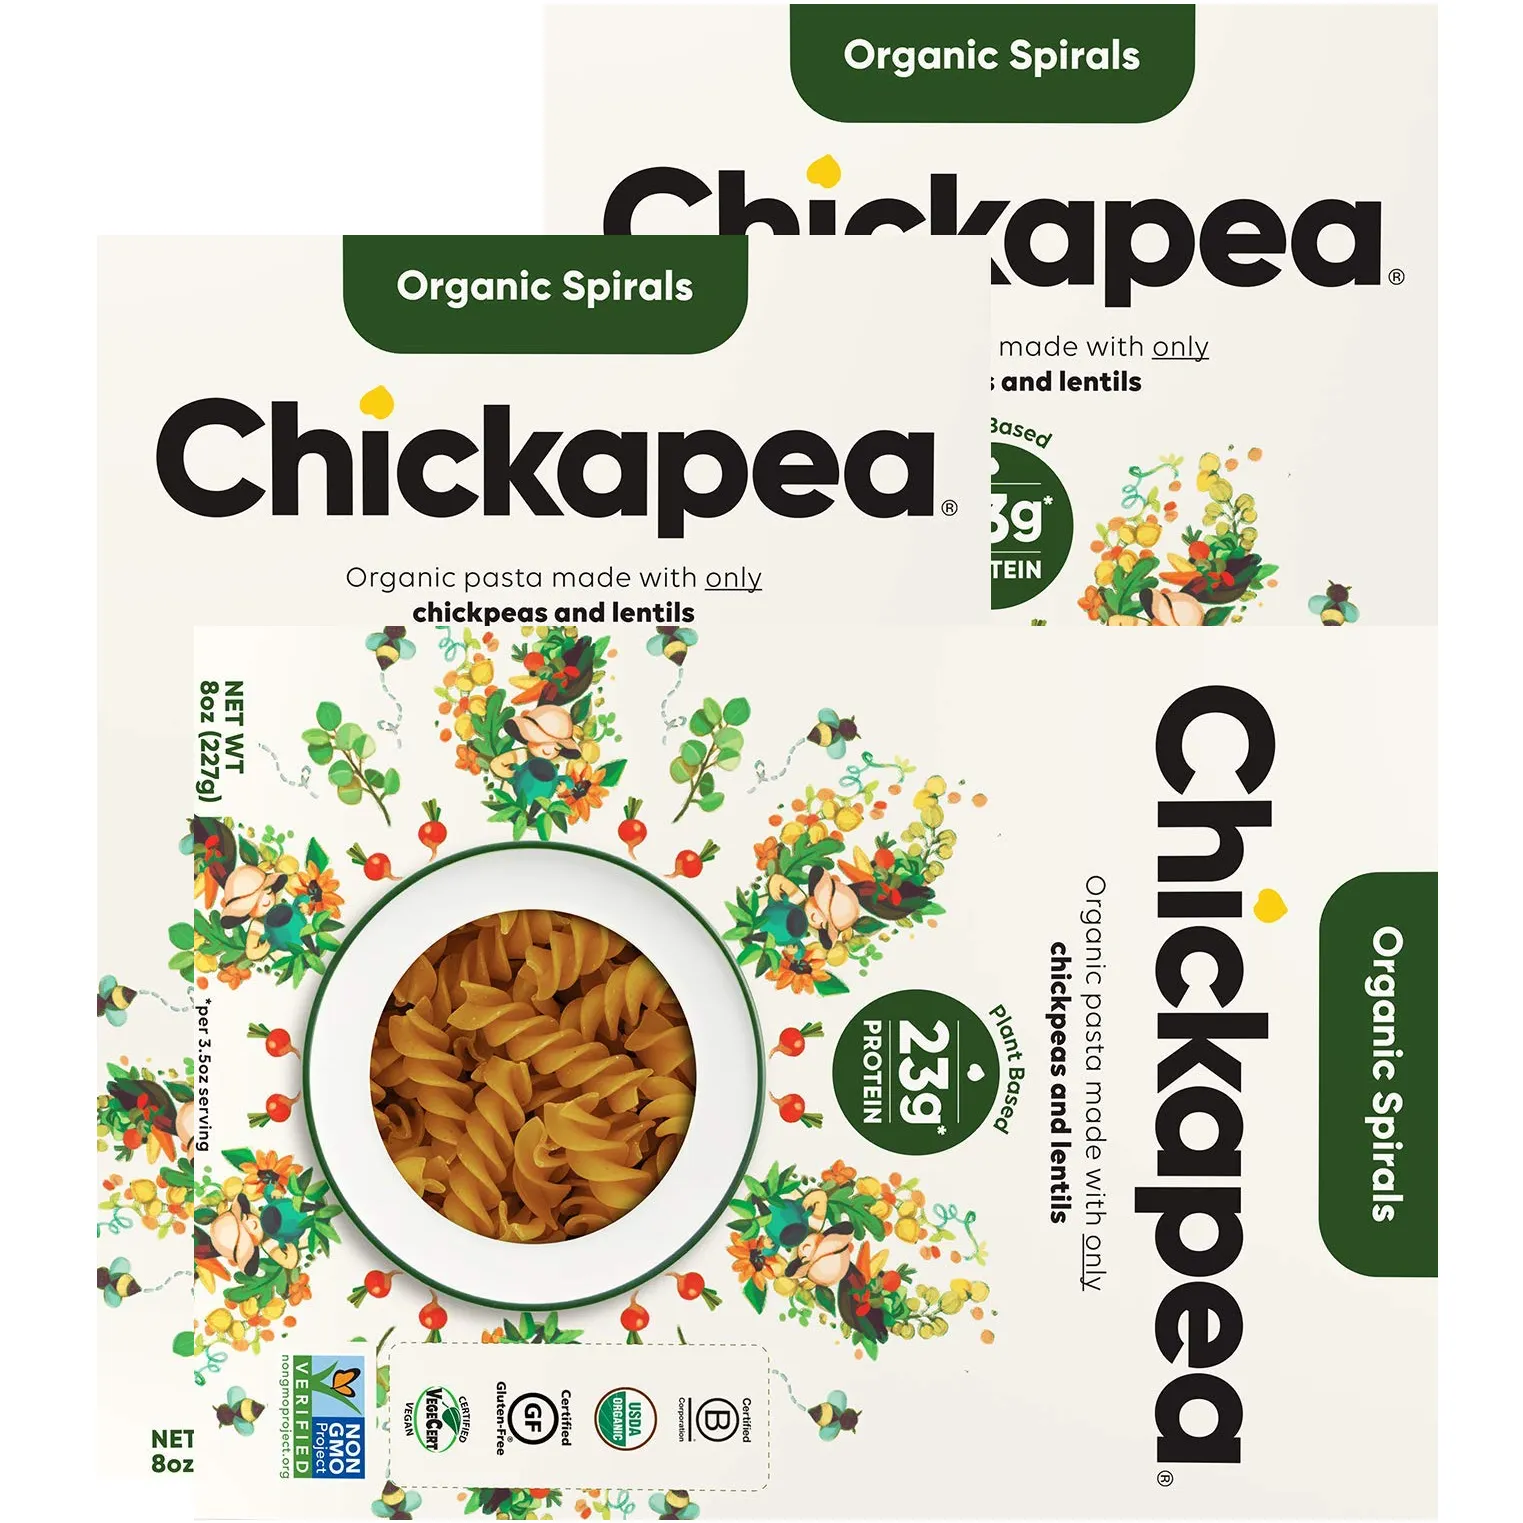 Free Chickapea Organic Spirals